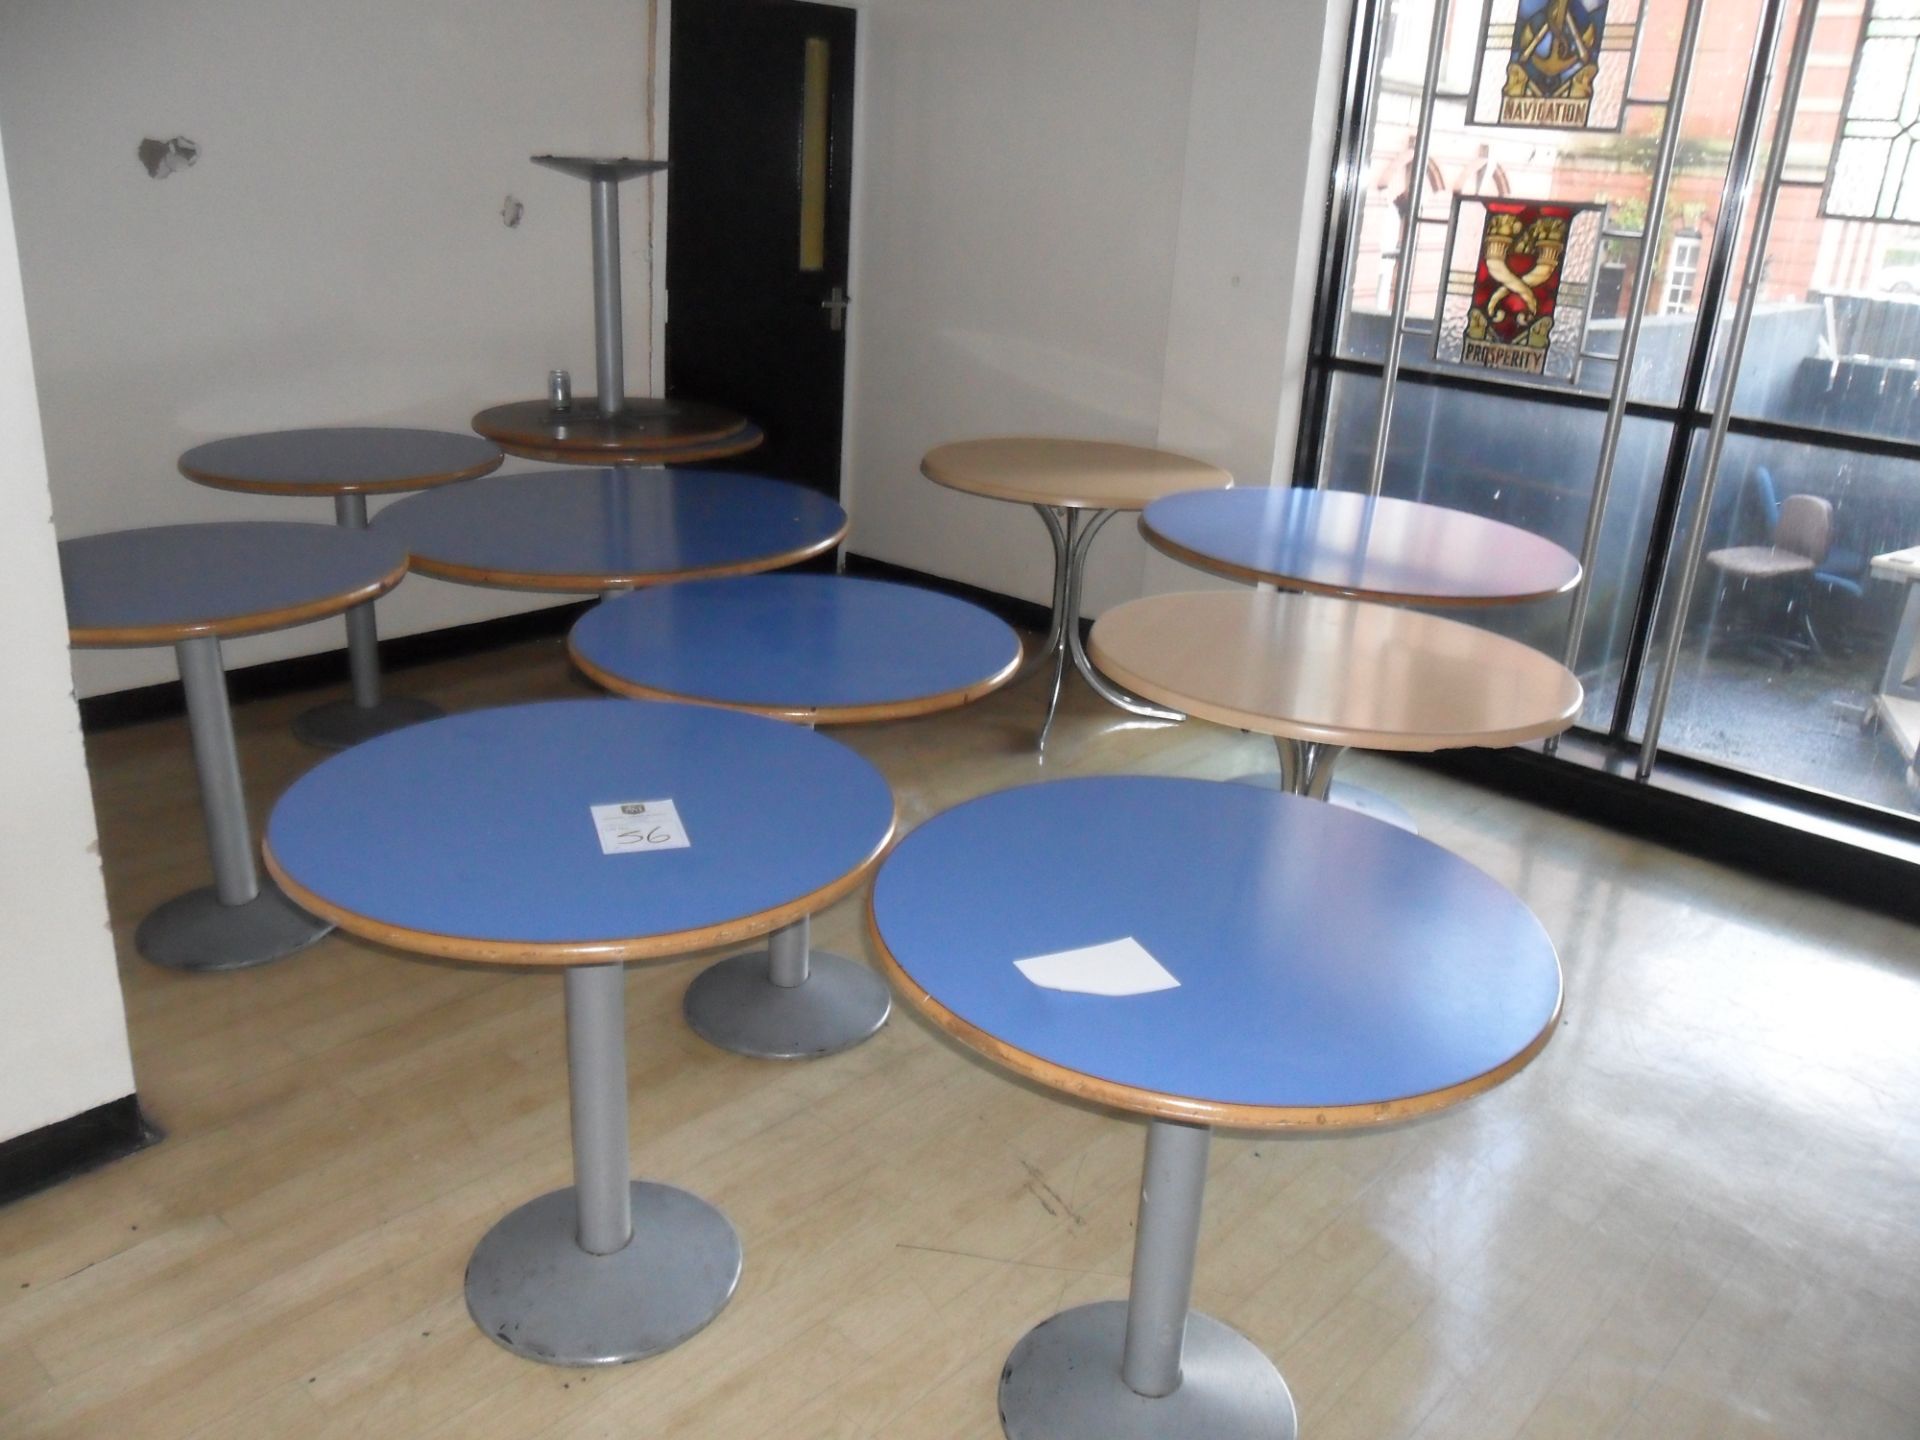 2 x cafe restaurant tables